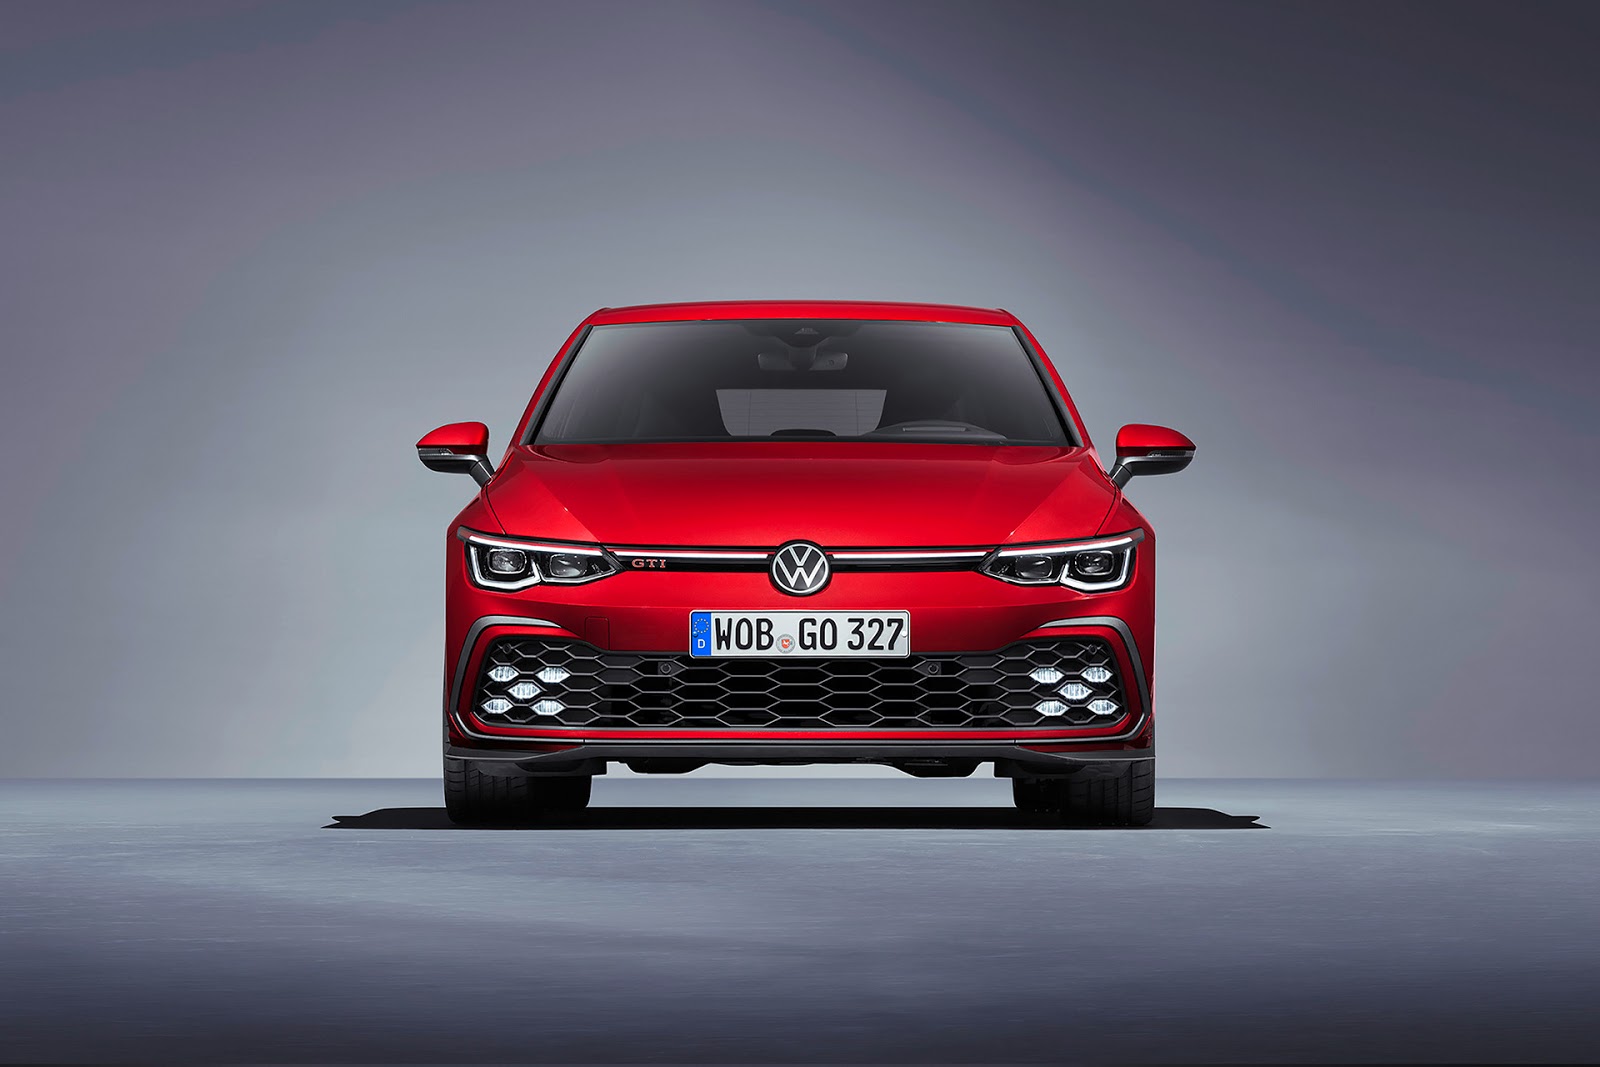 NEO2BVOLKSWAGEN2BGOLF2BGTI 3 Volkswagen : Νέες σπορ και «πράσινες» εκδόσεις του Golf στην ελληνική αγορά